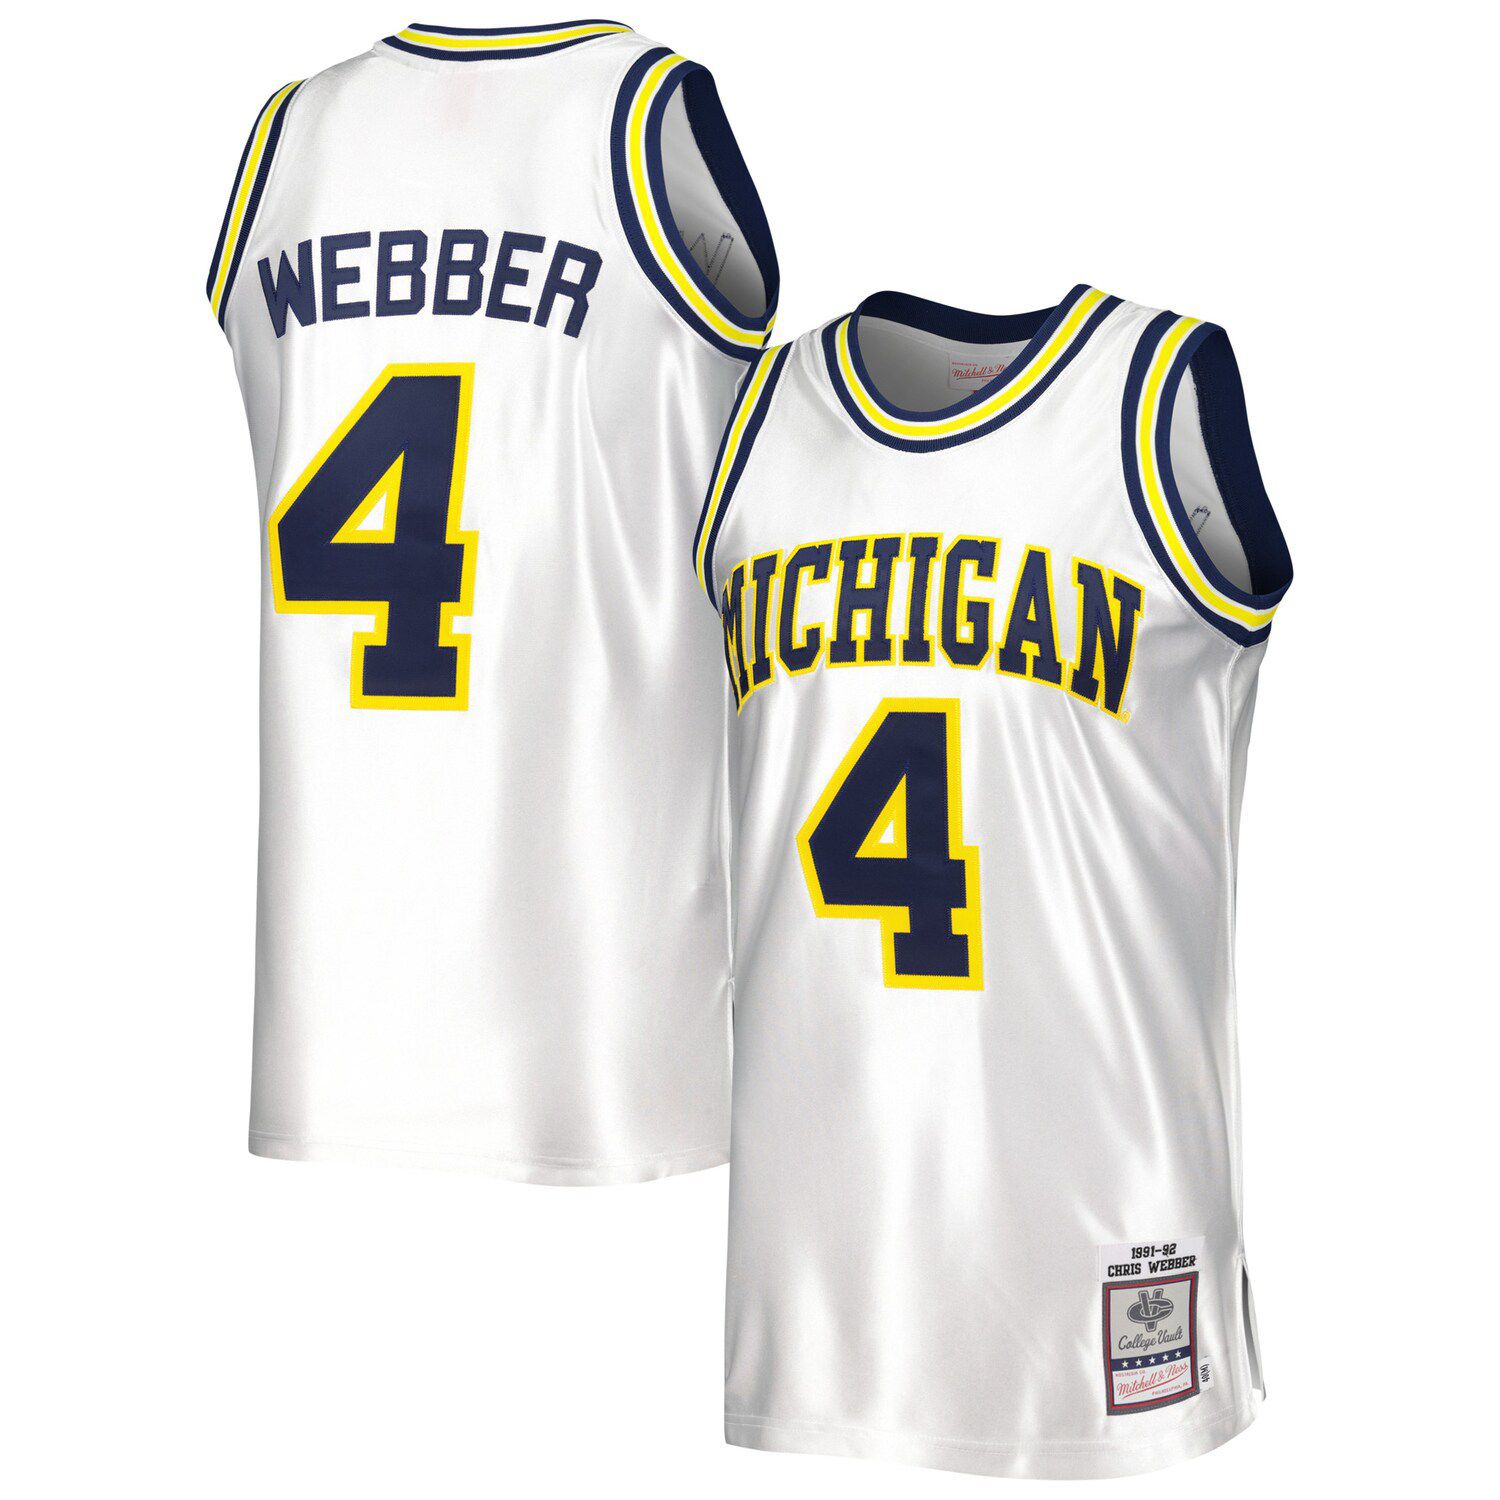 Michigan Wolverines white jersey